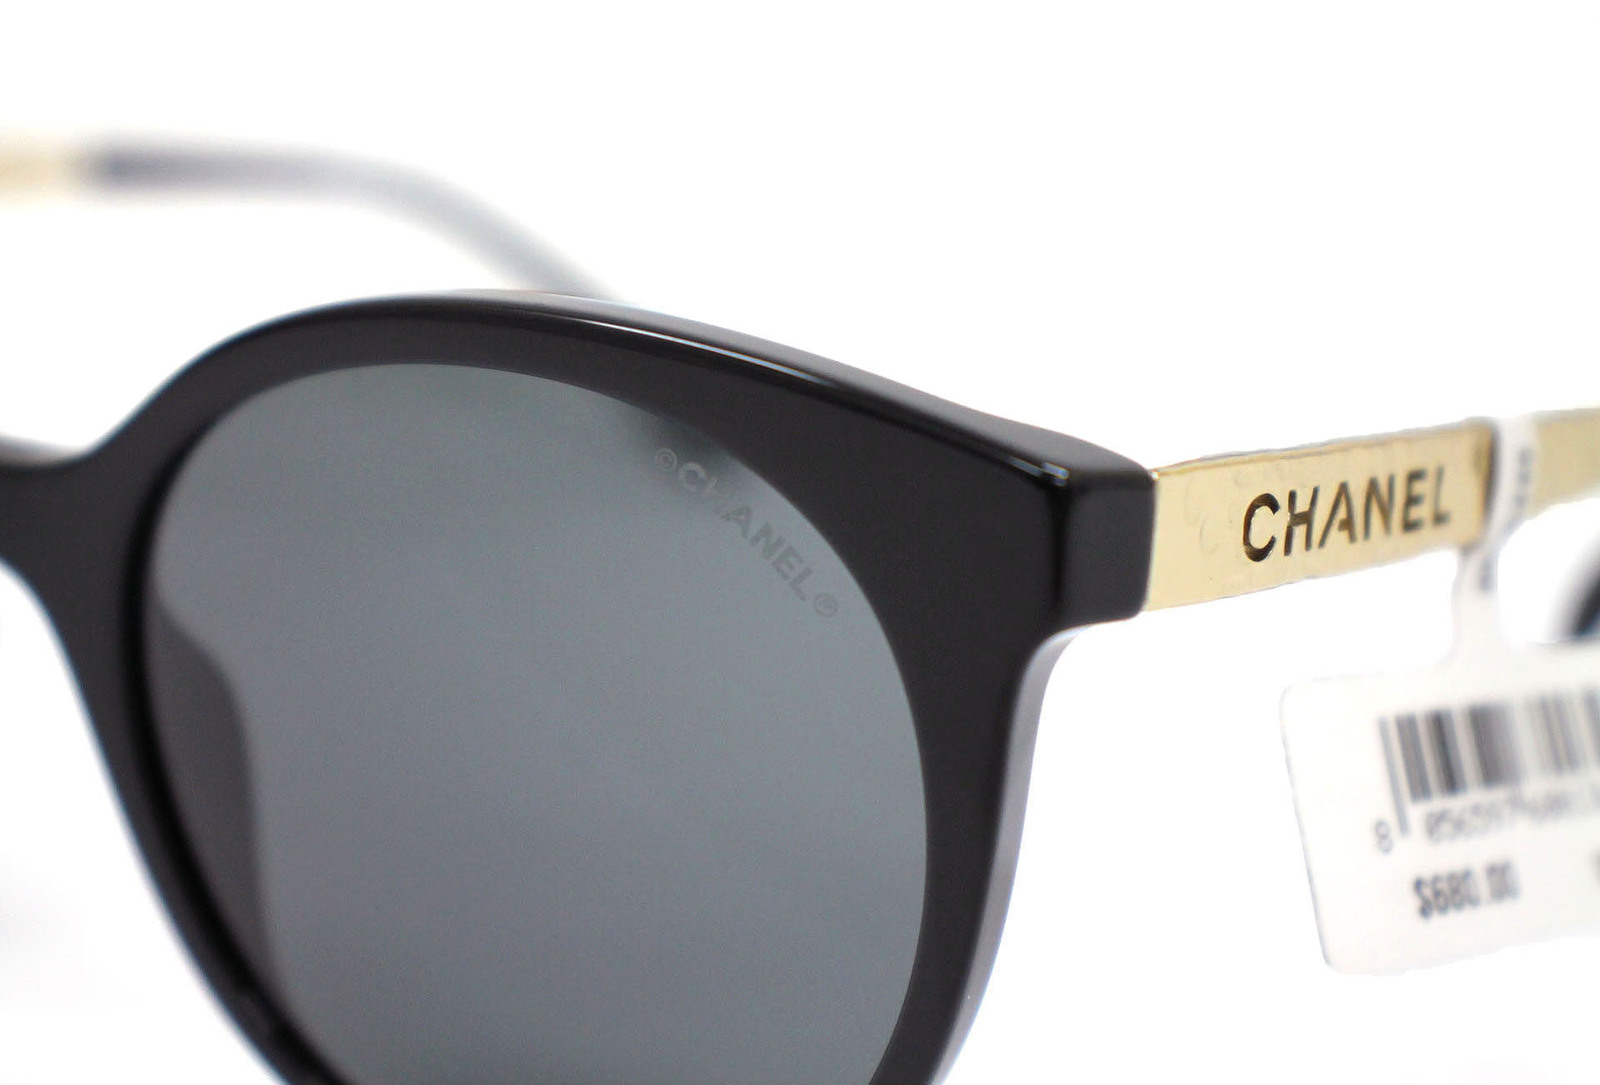 Sunglasses Oval Sunglasses acetate  metal  Fashion  CHANEL